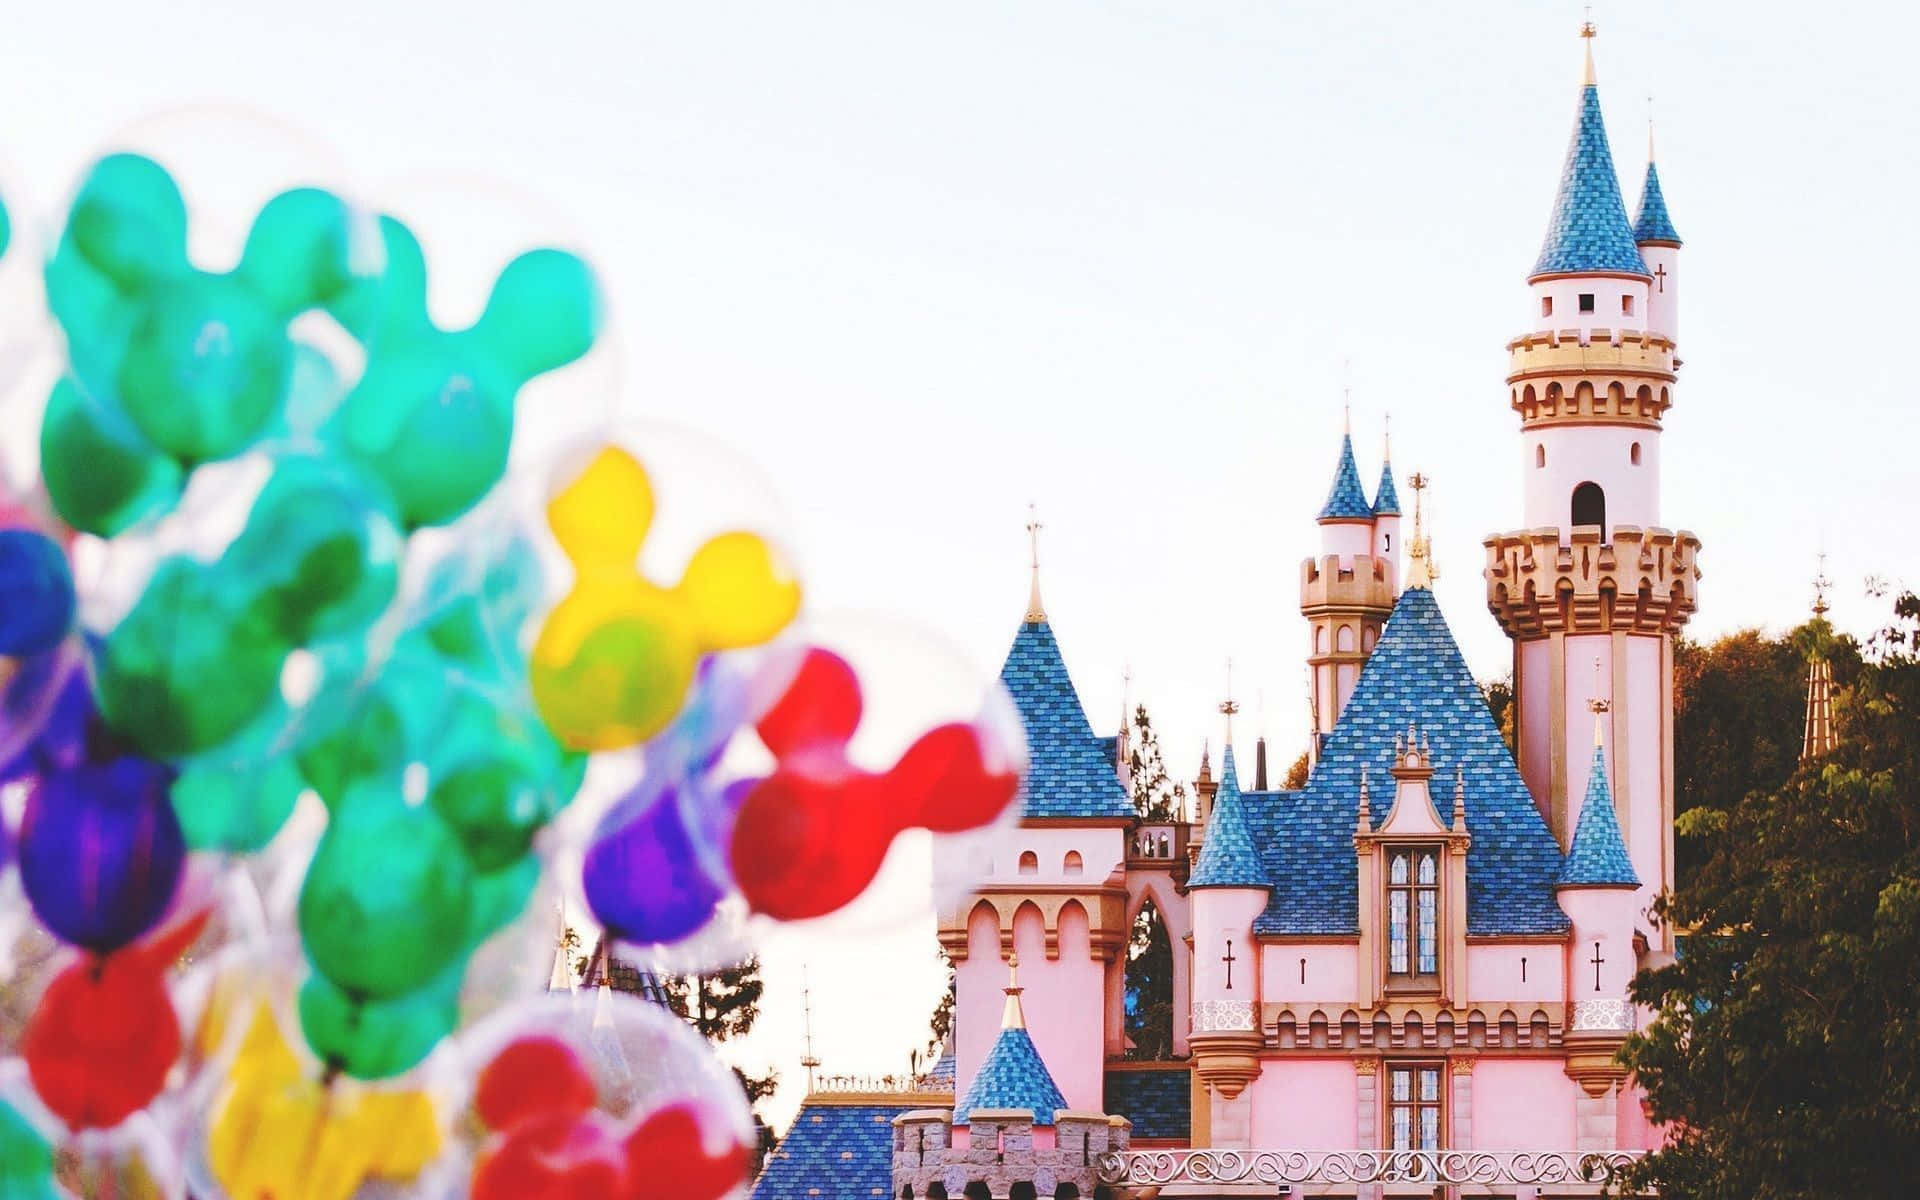 Adéntrateen Un Lugar Donde La Magia Es Real: El Castillo De Disney.